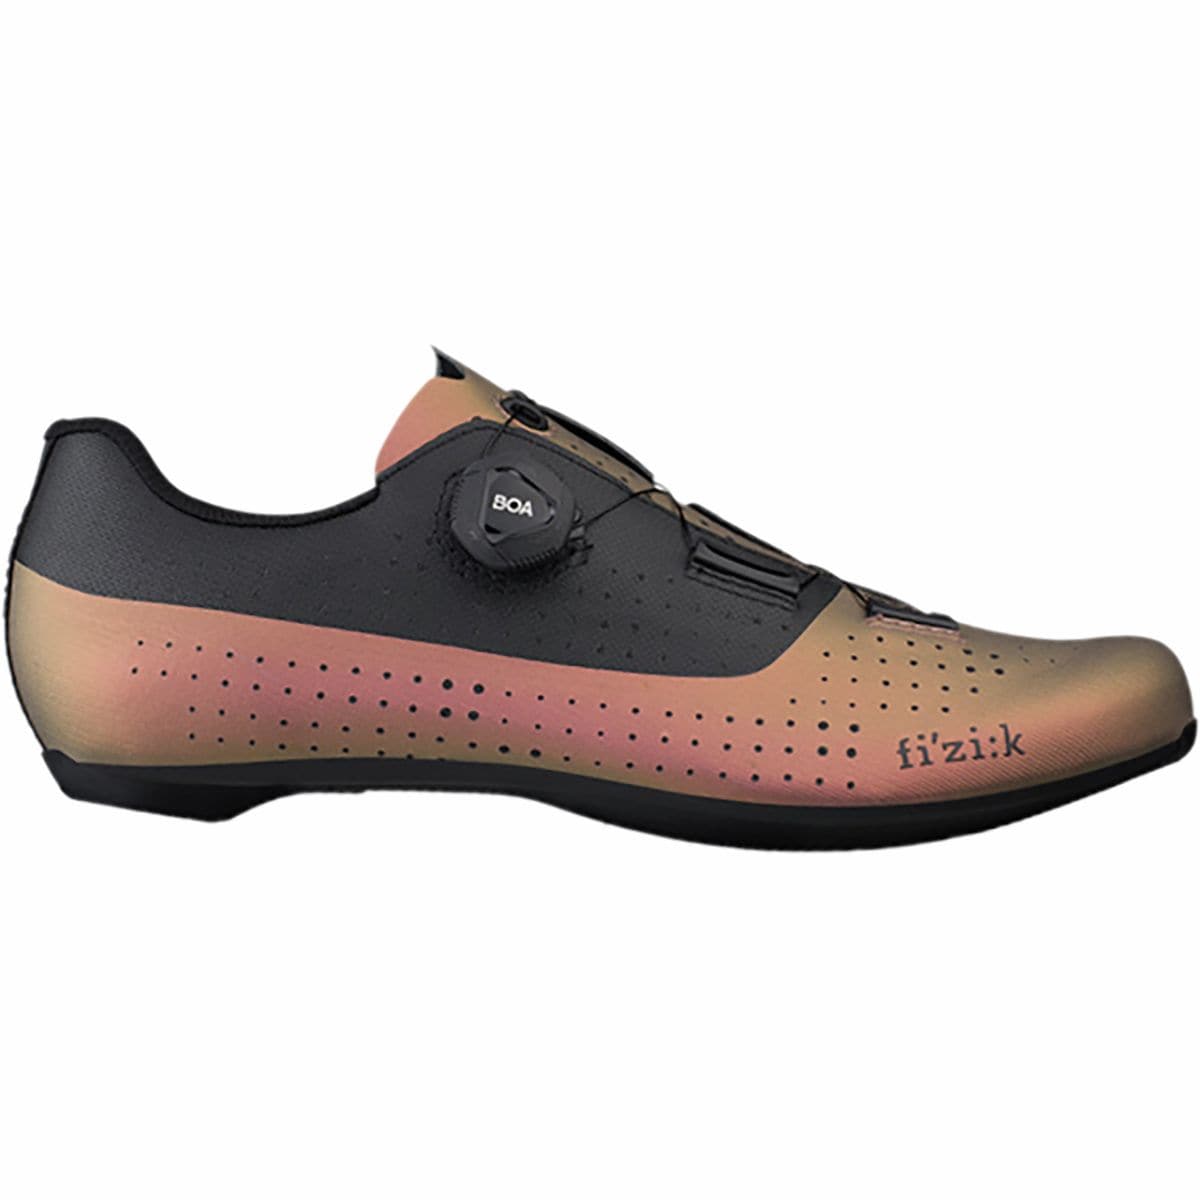 Fi'zi:k Tempo Overcurve R4 Iridescent Cycling Shoe Copper/Black, 37.0 - Men's